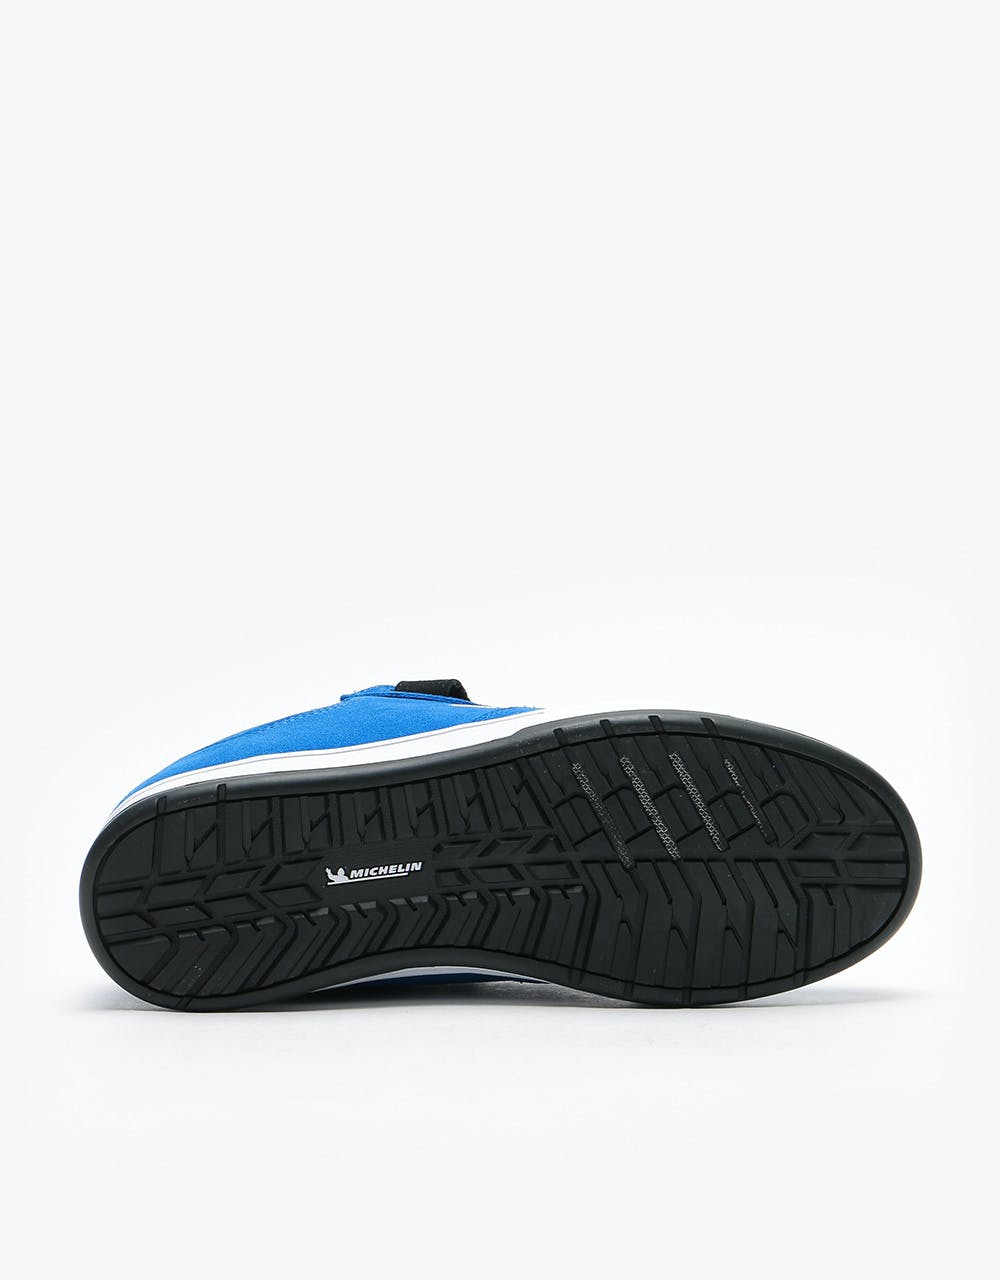 Etnies x Michelin Joslin 2 Skate Shoes - Royal/Black/White